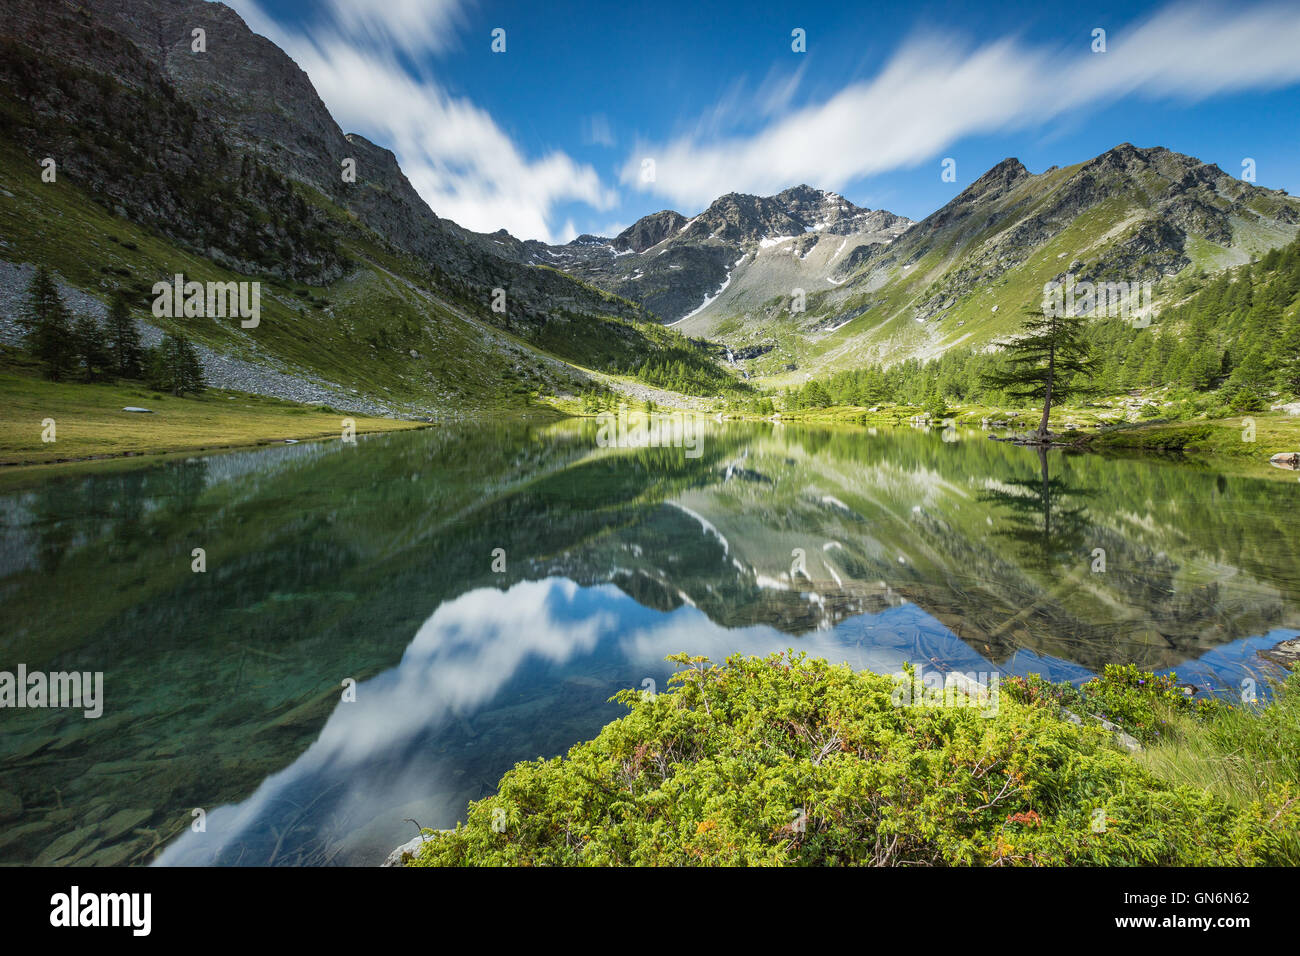 Lake reflections at Lake Arpy (Lago d'Arpy). Summer season. Morgex. The Aosta Valley. Italian Alps. Europe. Stock Photo